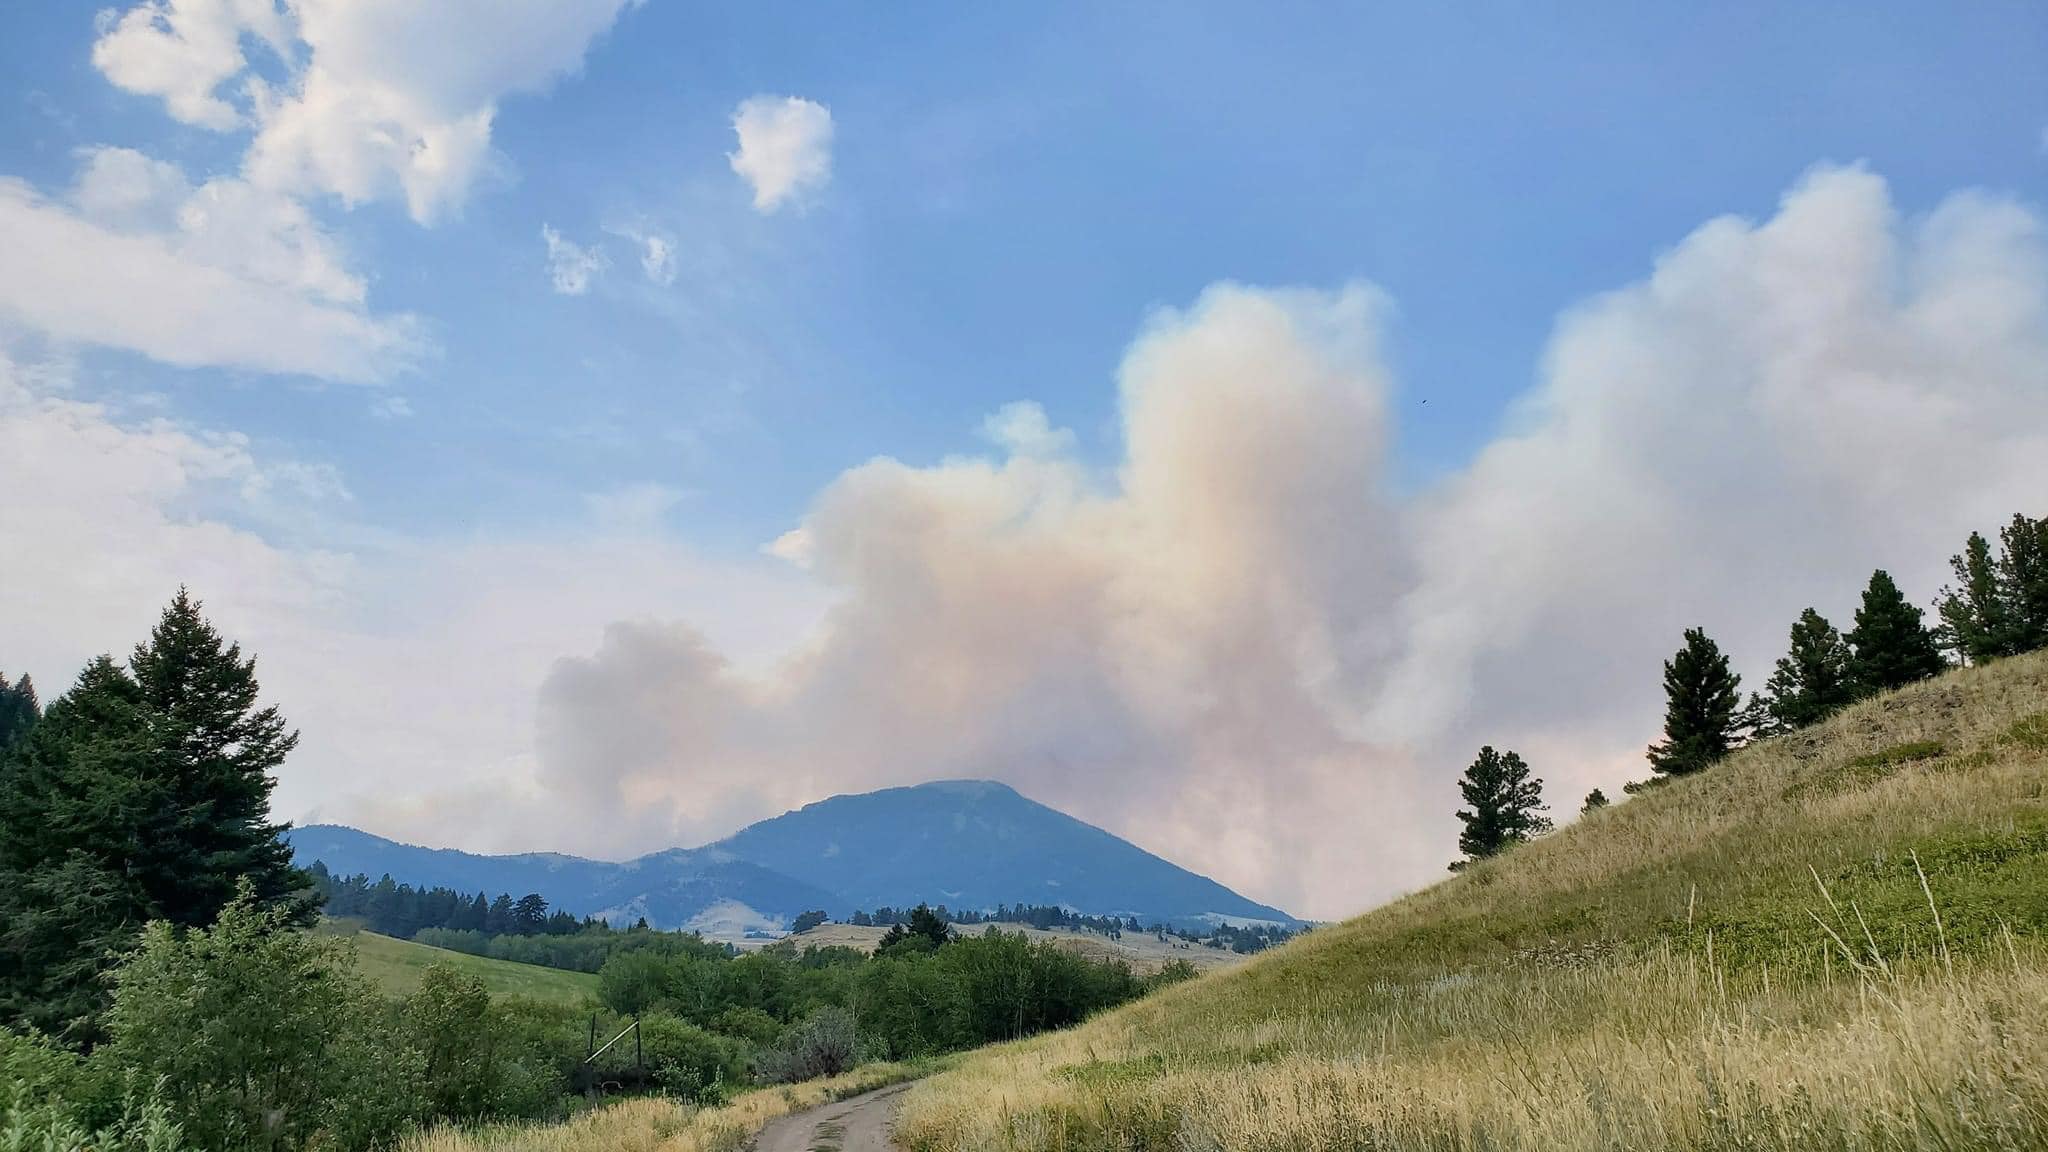 Montana ski area under threat from wildfire